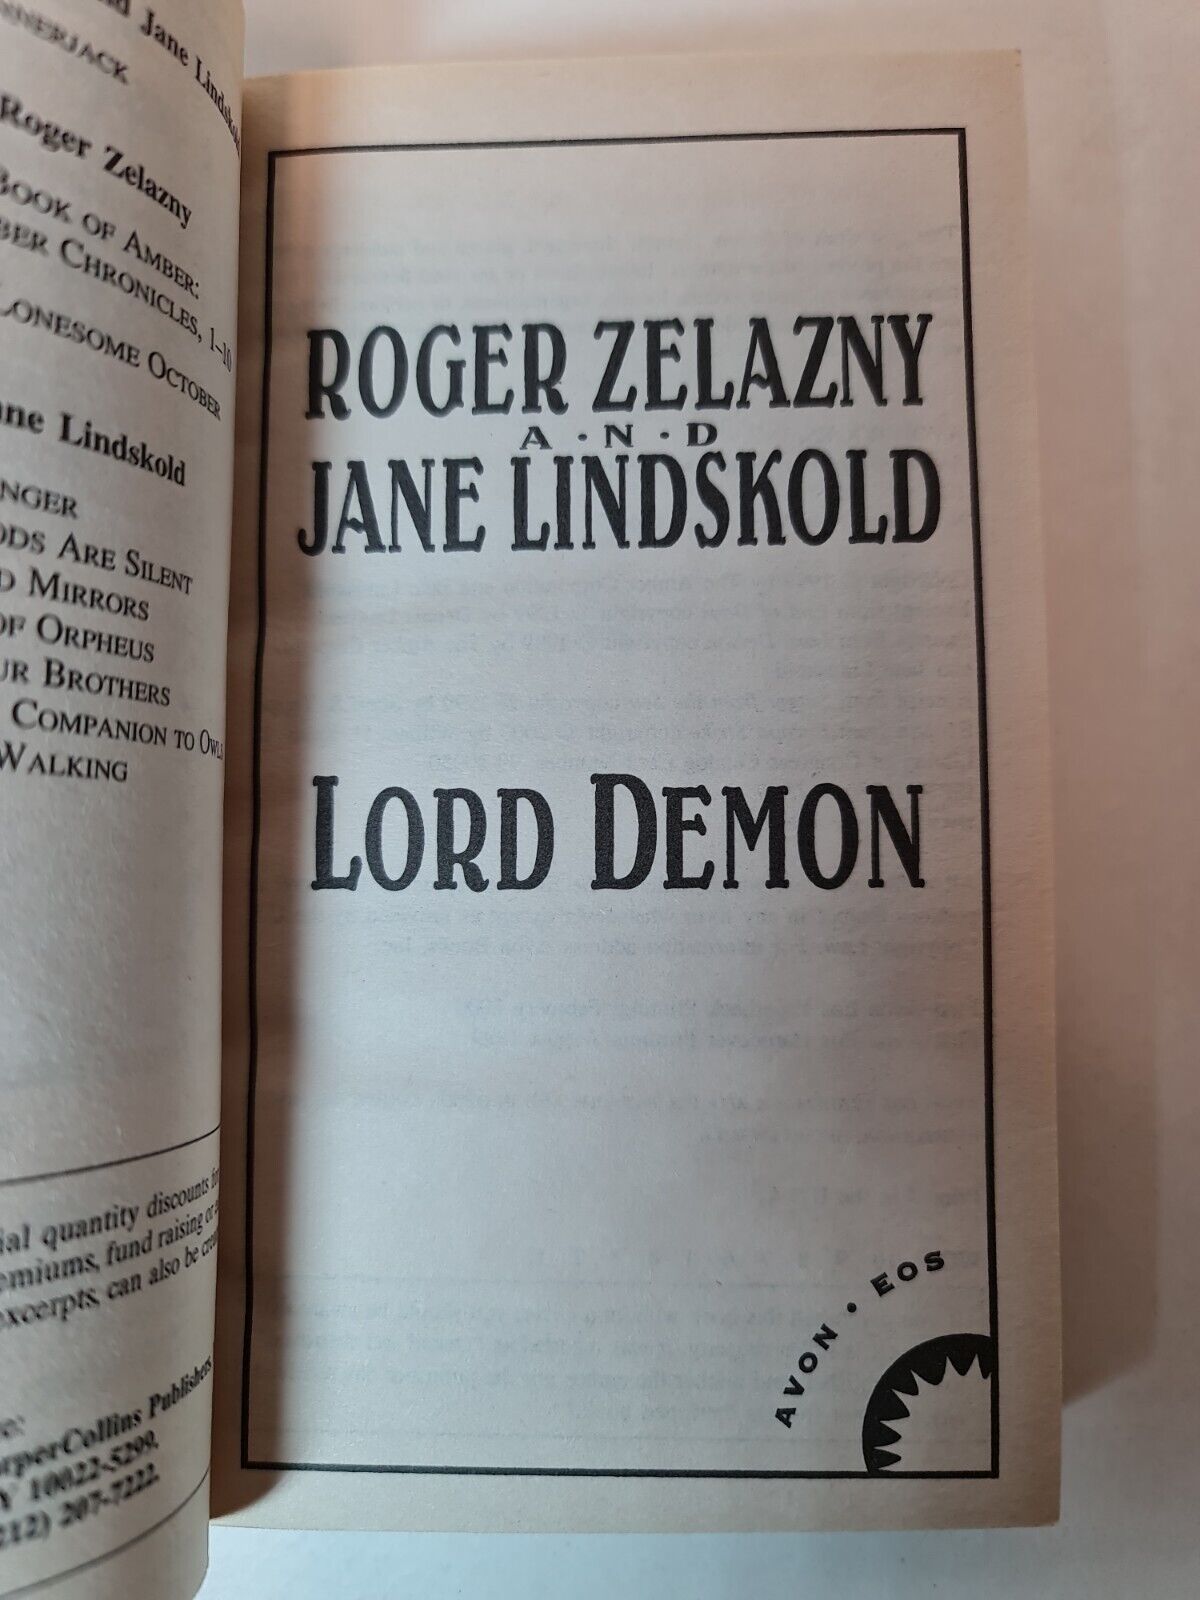 Lord Demon by Roger Zelazny (2000)